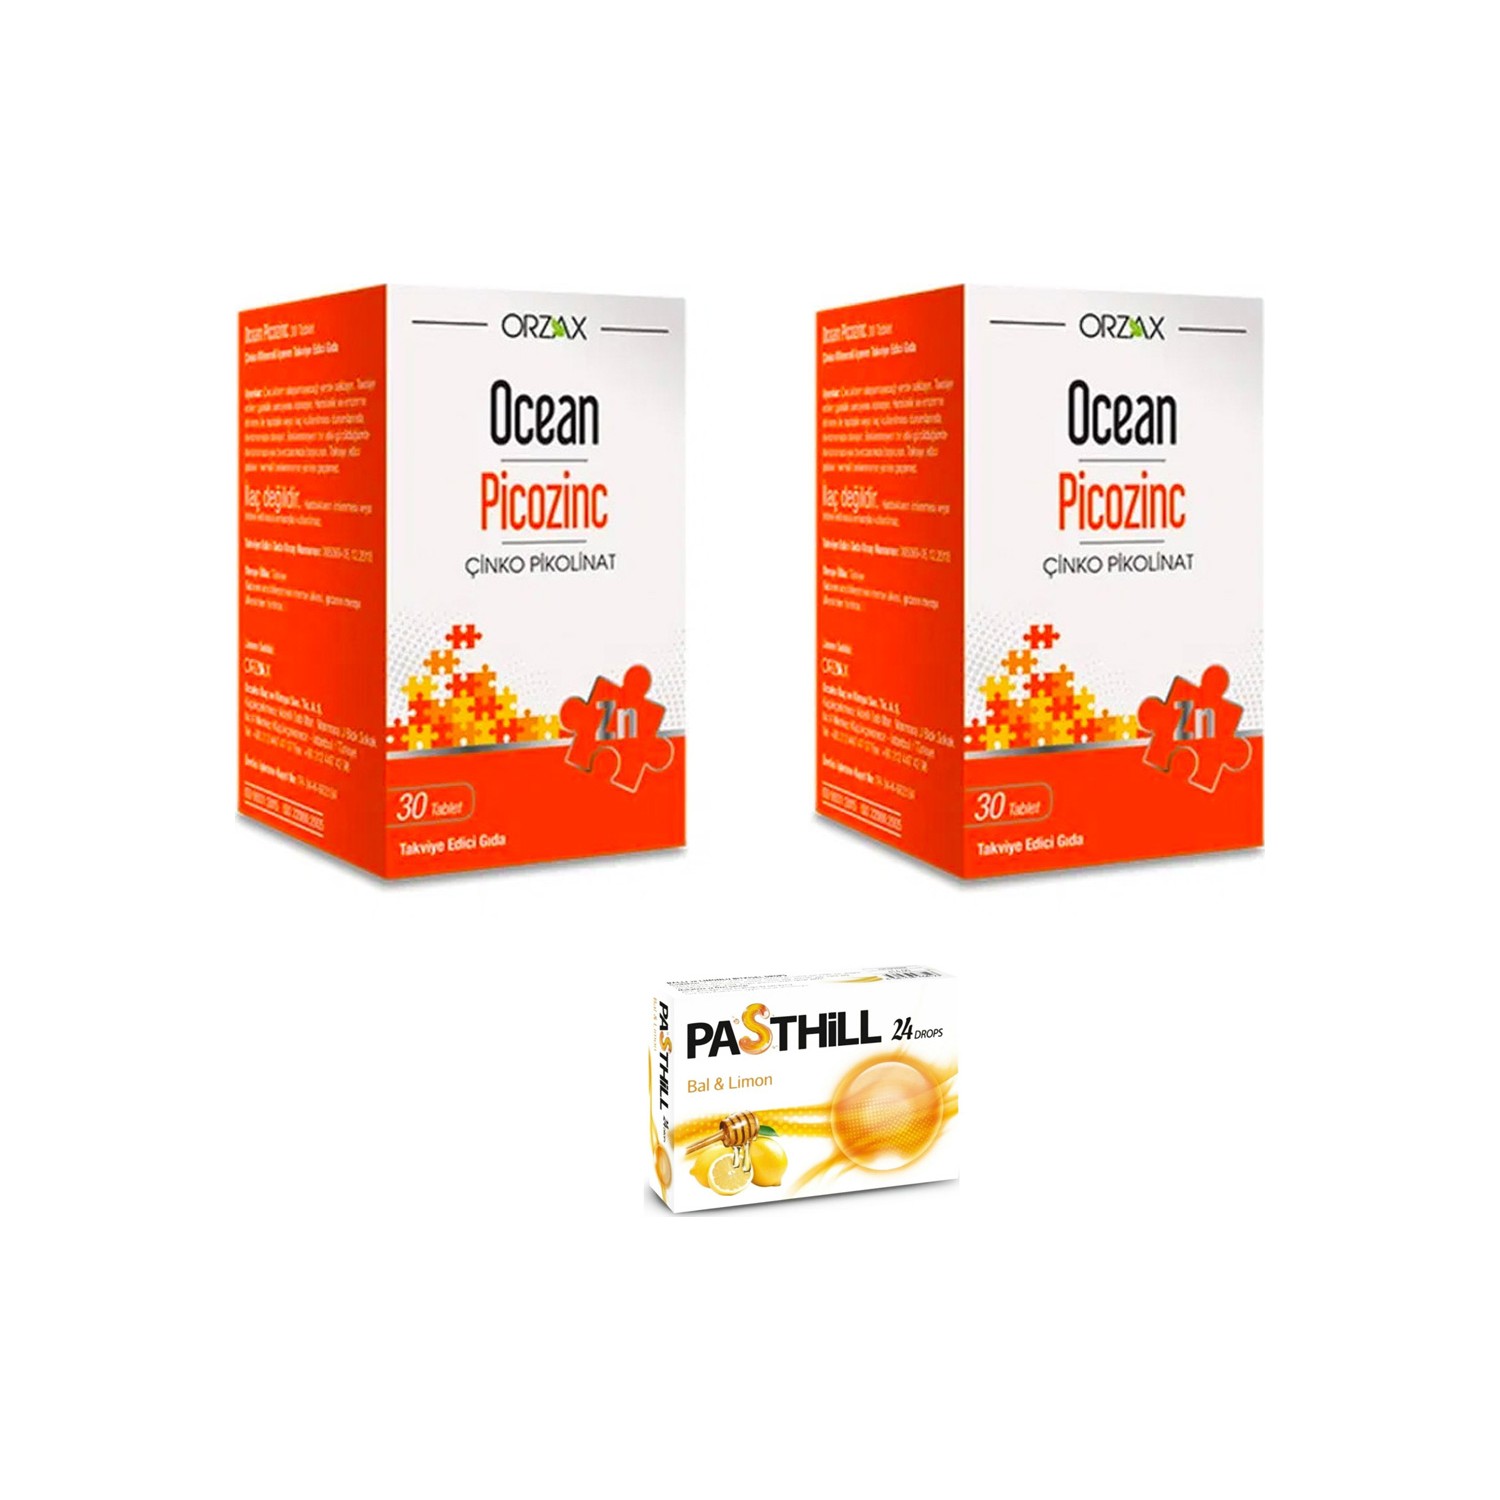 минералы maxler zinc picolinate 120 шт Пищевая добавка Orzax Ocean Picozinc Cinko Picolinate, 2 упаковки по 30 таблеток + Пастилки Pasthill со вкусом меда и лимона